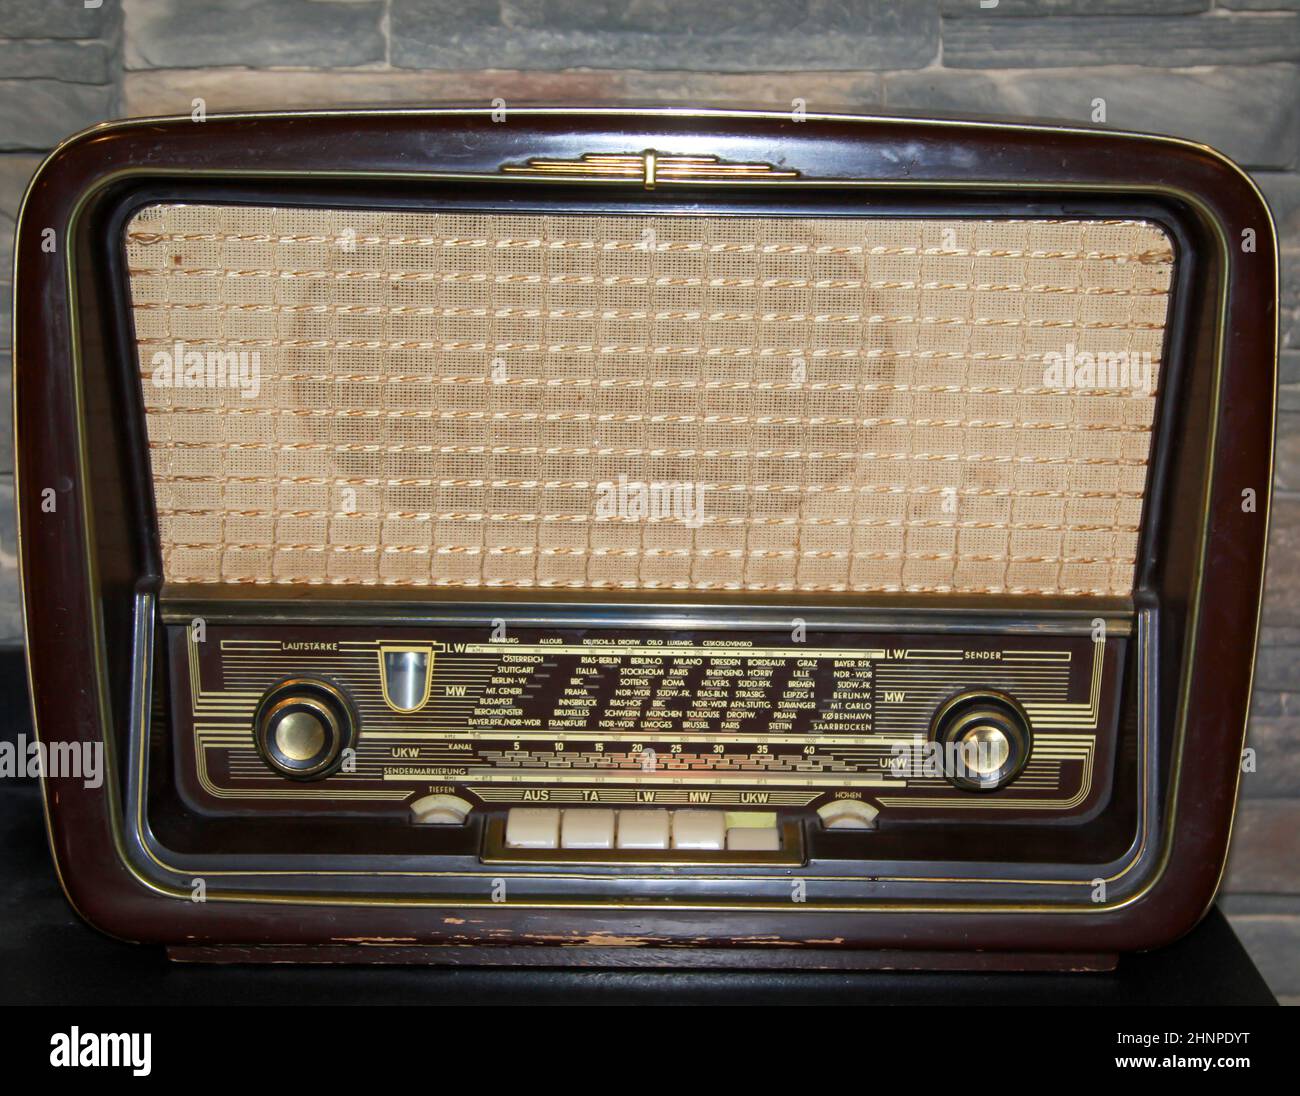 Ein alter Röhrenradio, UKW-Radioempfänger Stockfotografie - Alamy